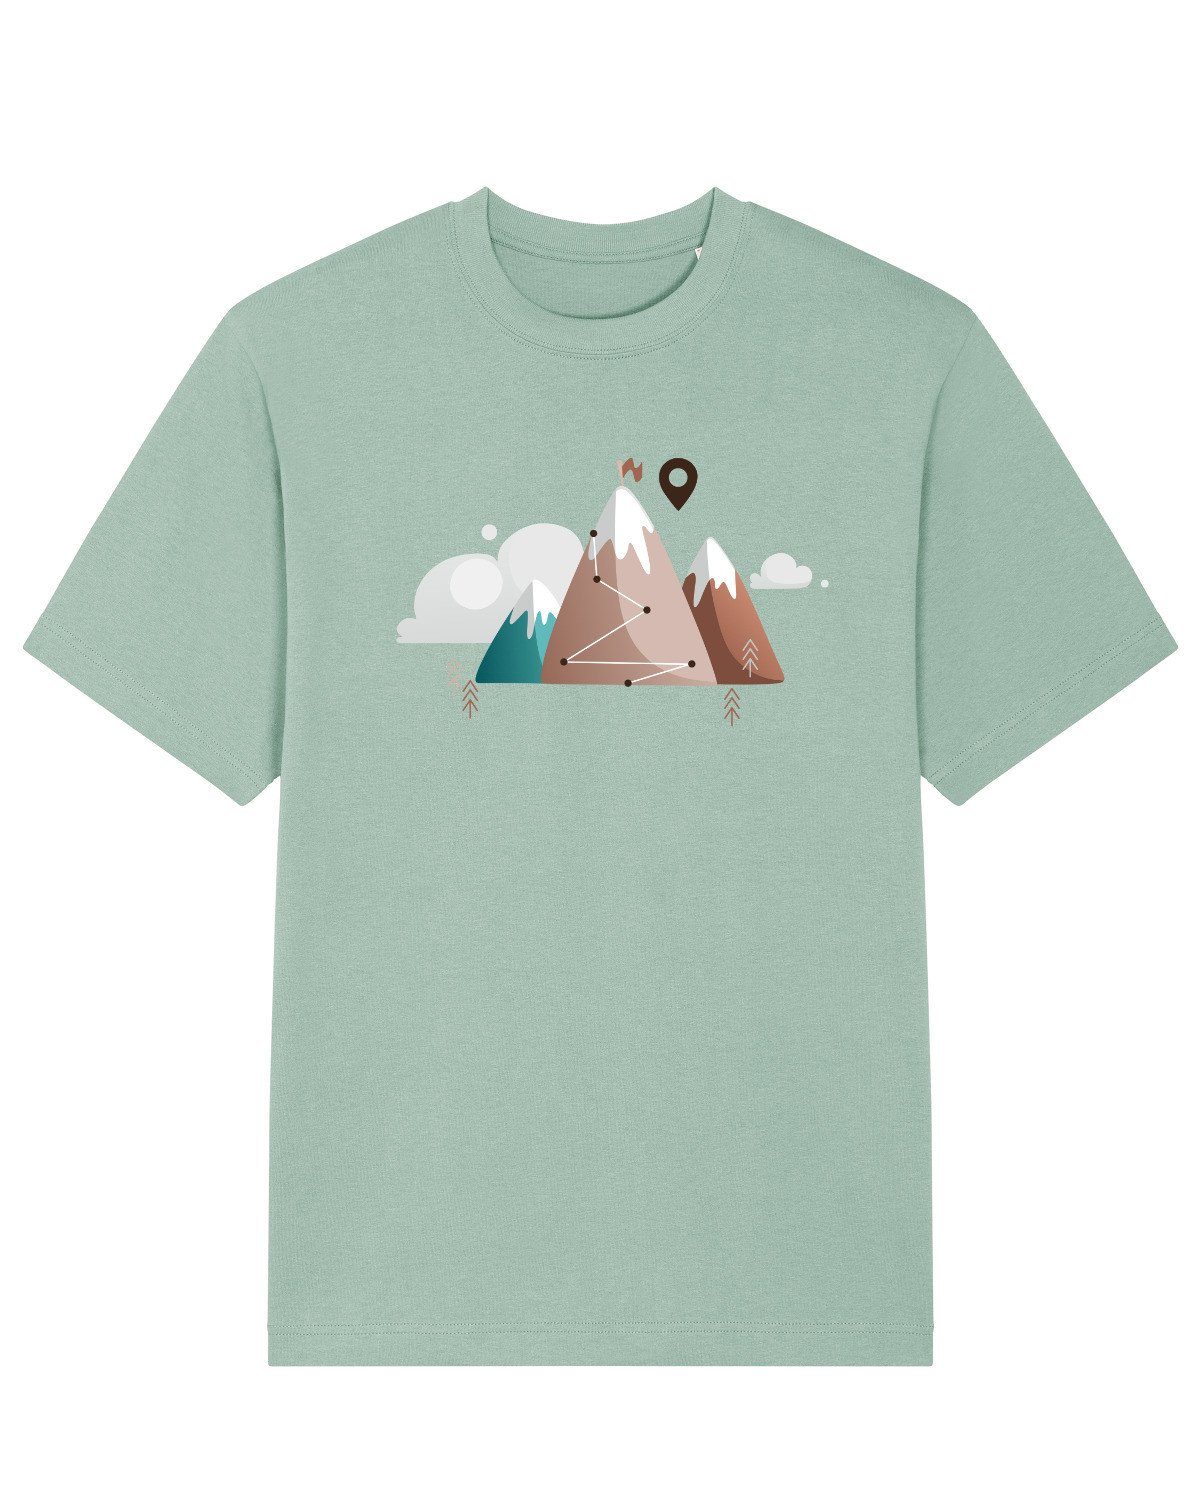 wat-apparel-print-shirt-mountain-path-clouds-1-tlg-aloe.jpg?$formatz$